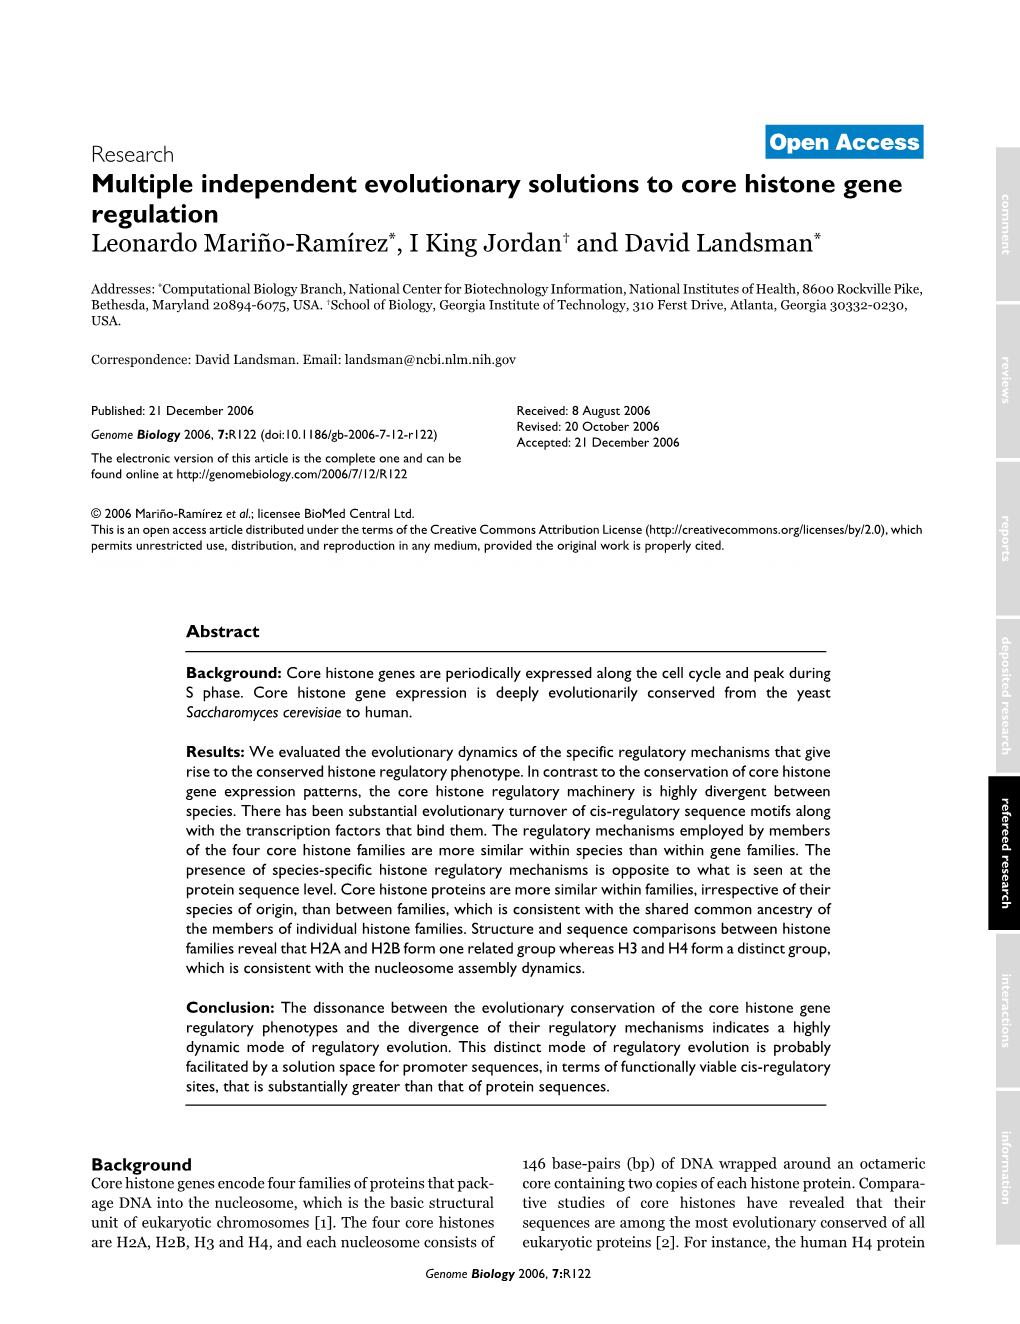 Multiple Independent Evolutionary Solutions to Core Histone Gene Comment Regulation Leonardo Mariño-Ramírez*, I King Jordan† and David Landsman*